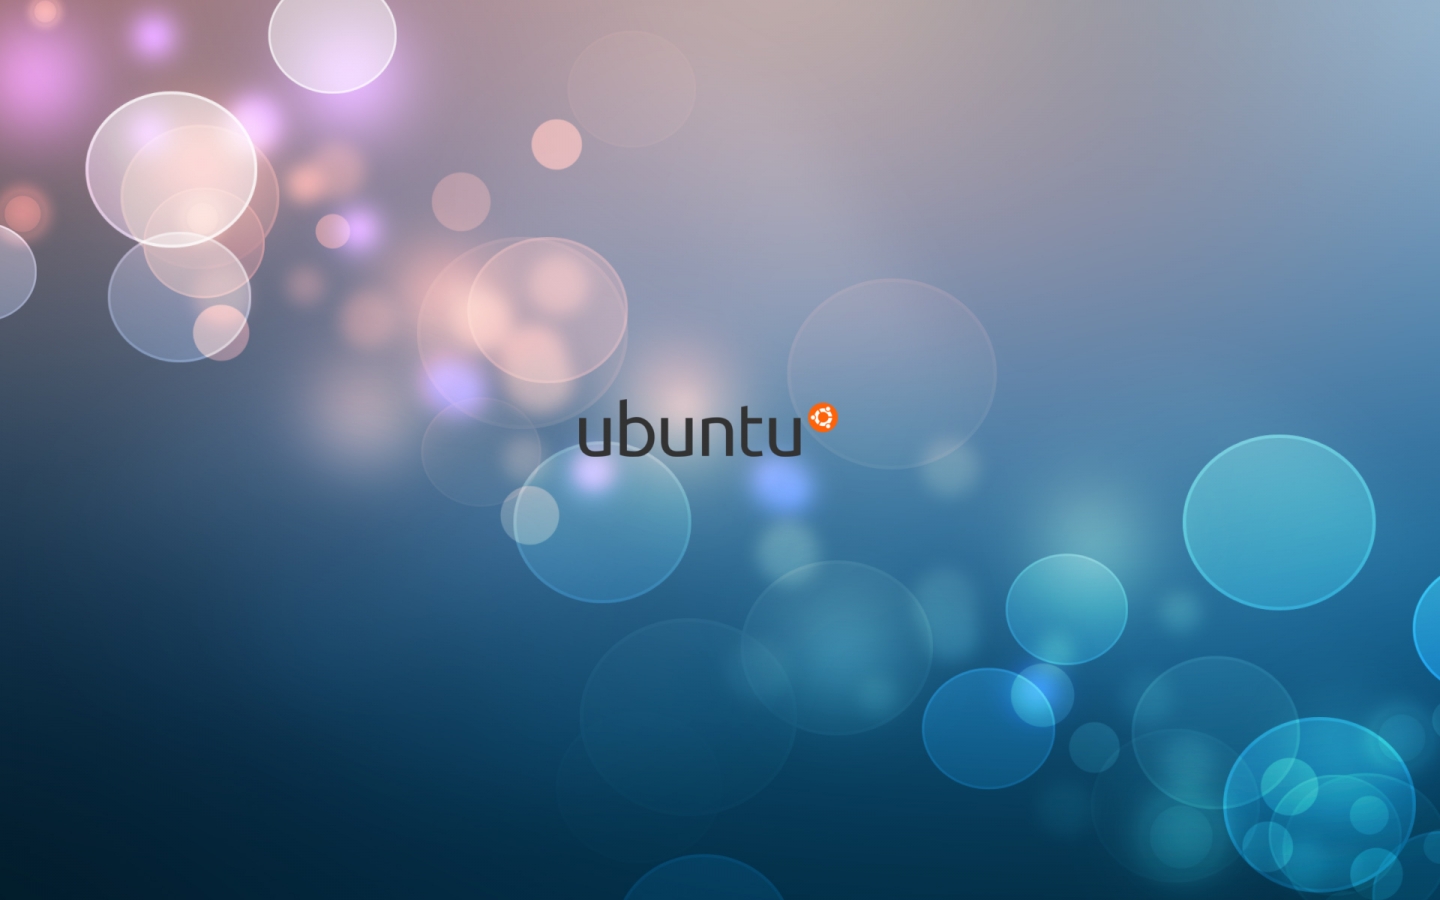 Ubuntu Minimalistic for 1440 x 900 widescreen resolution